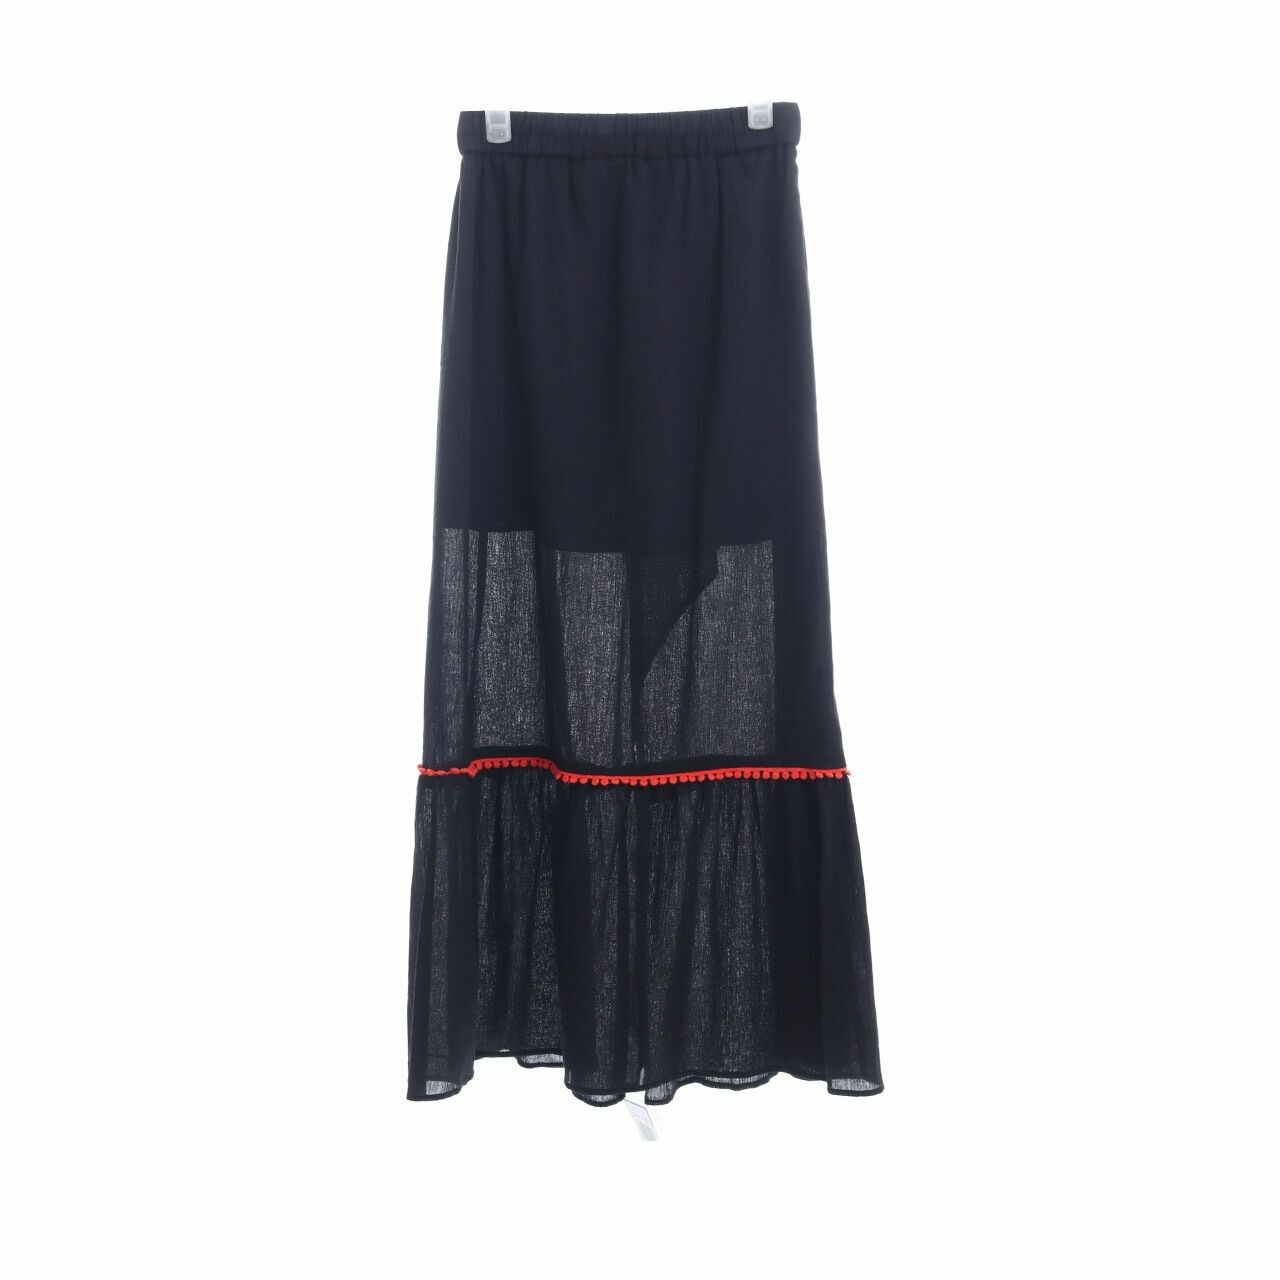 Kivee Black Slit Mini Skirt